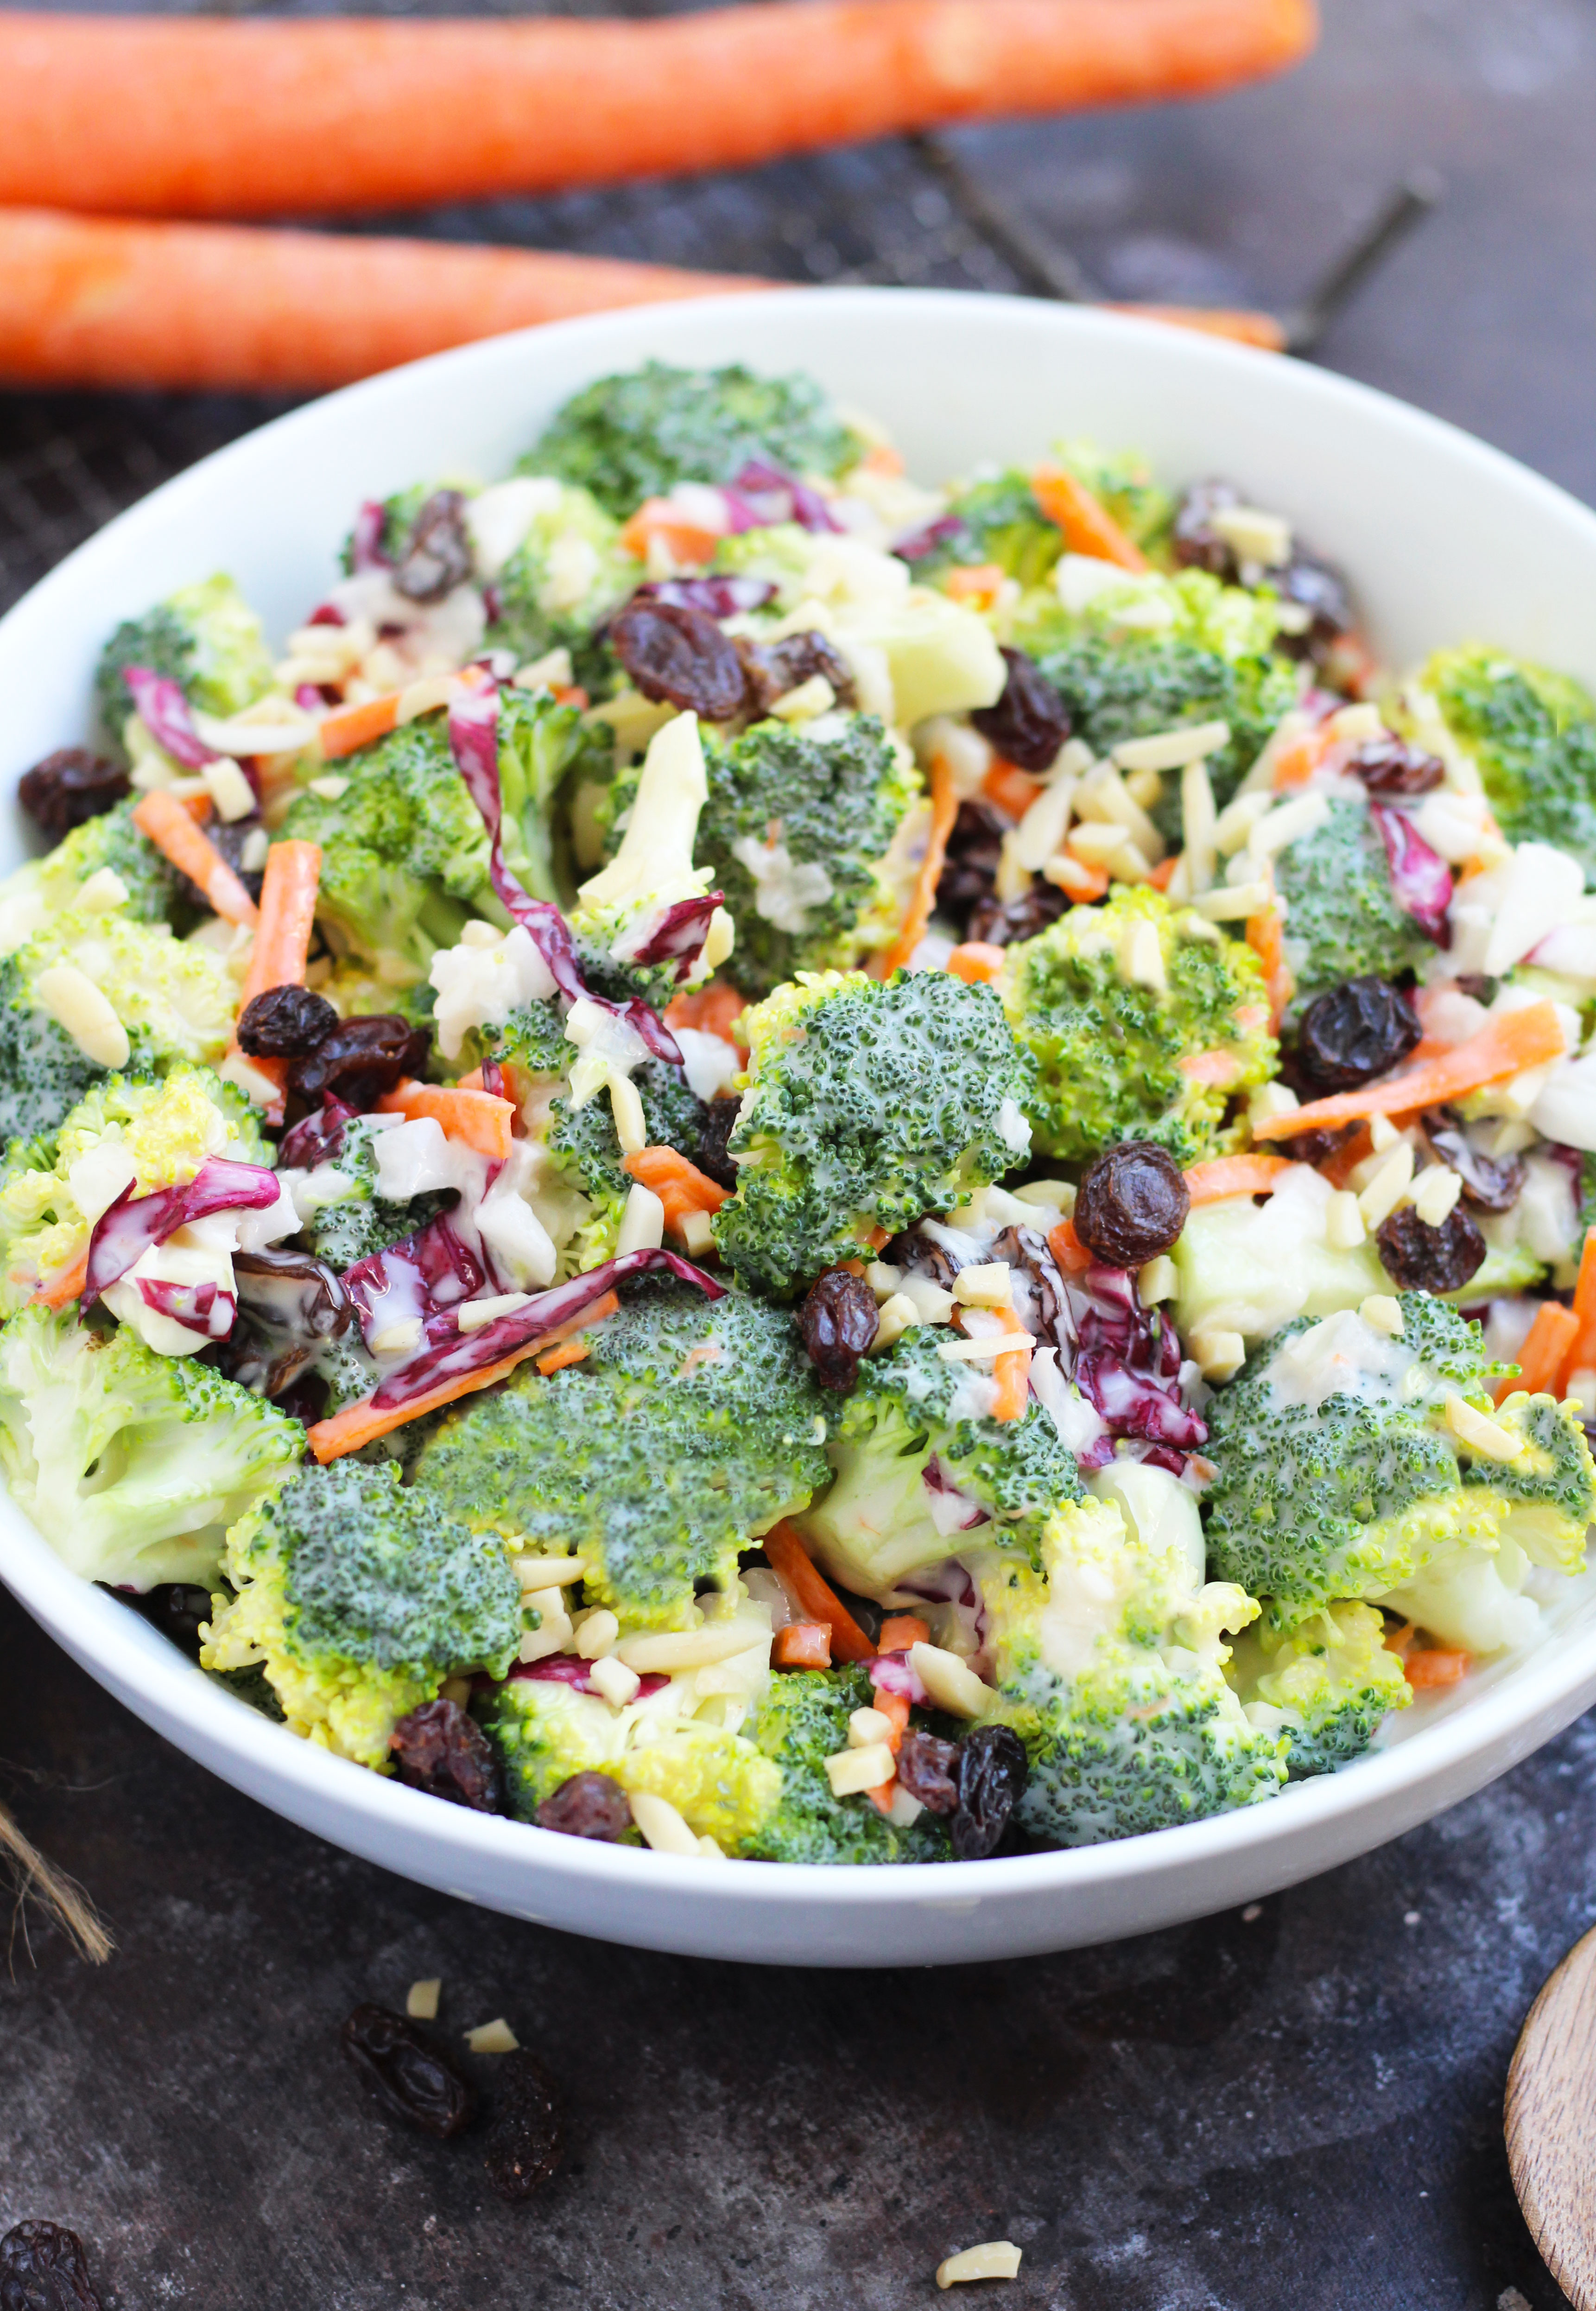 Broccoli Tortellini Salad With Coleslaw Dressing - Broccoli Walls